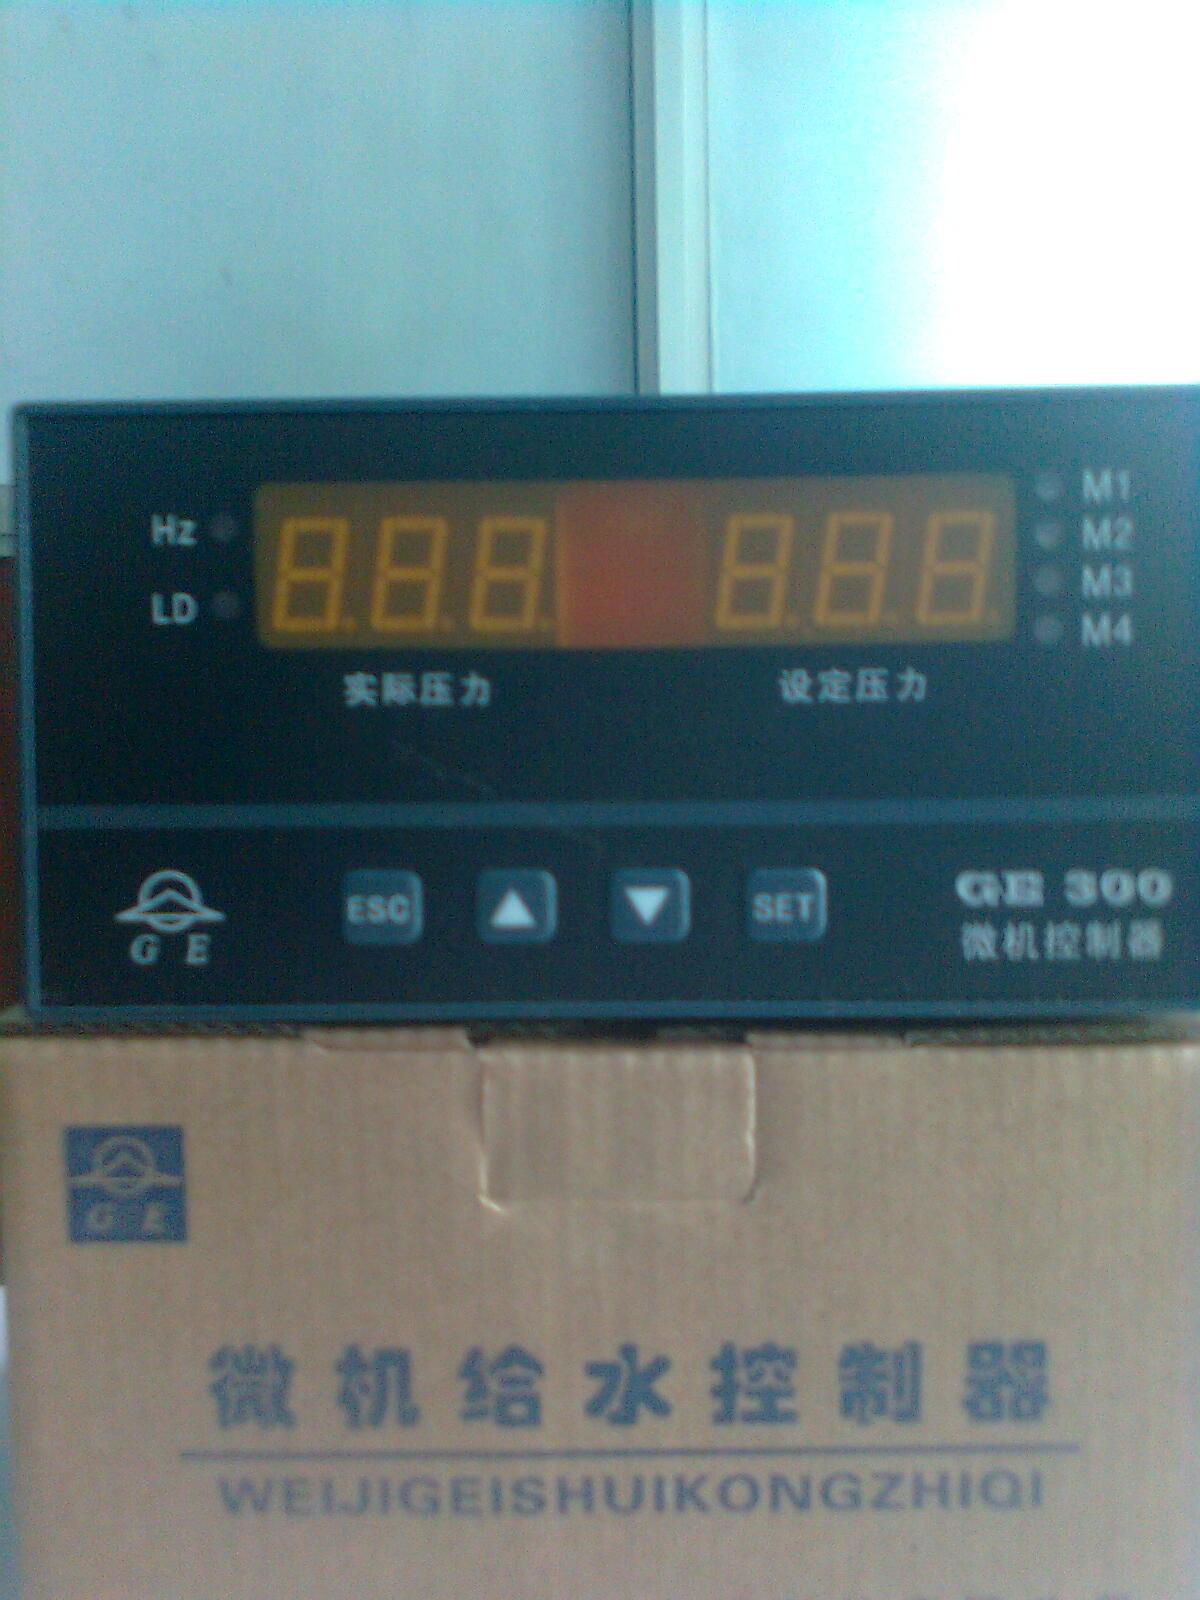 GE300B GE300C GE300D 微机恒压供水控制器